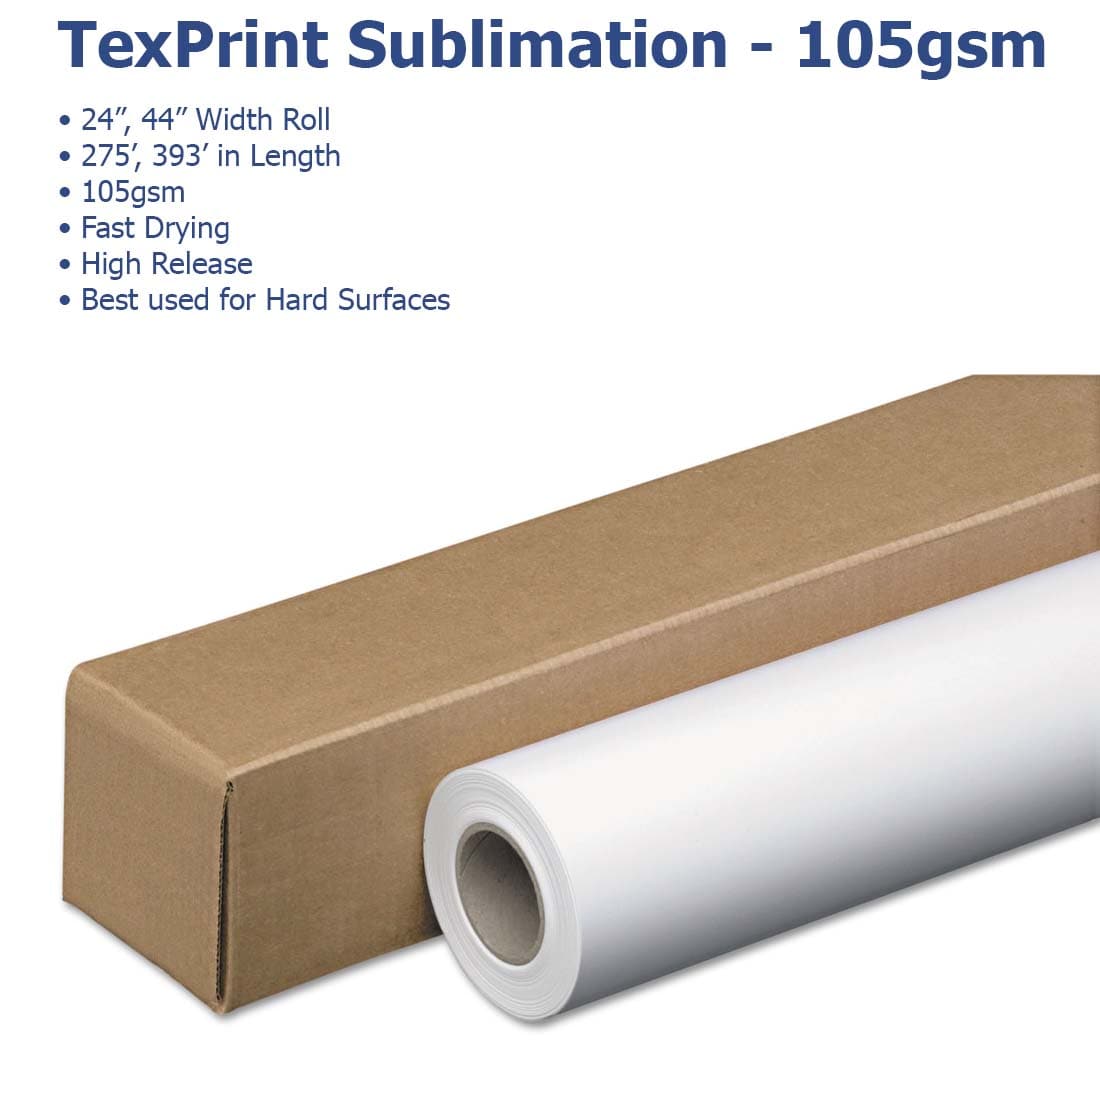 TexPrint Sublimation Paper - Rolls - Joto Imaging Supplies US